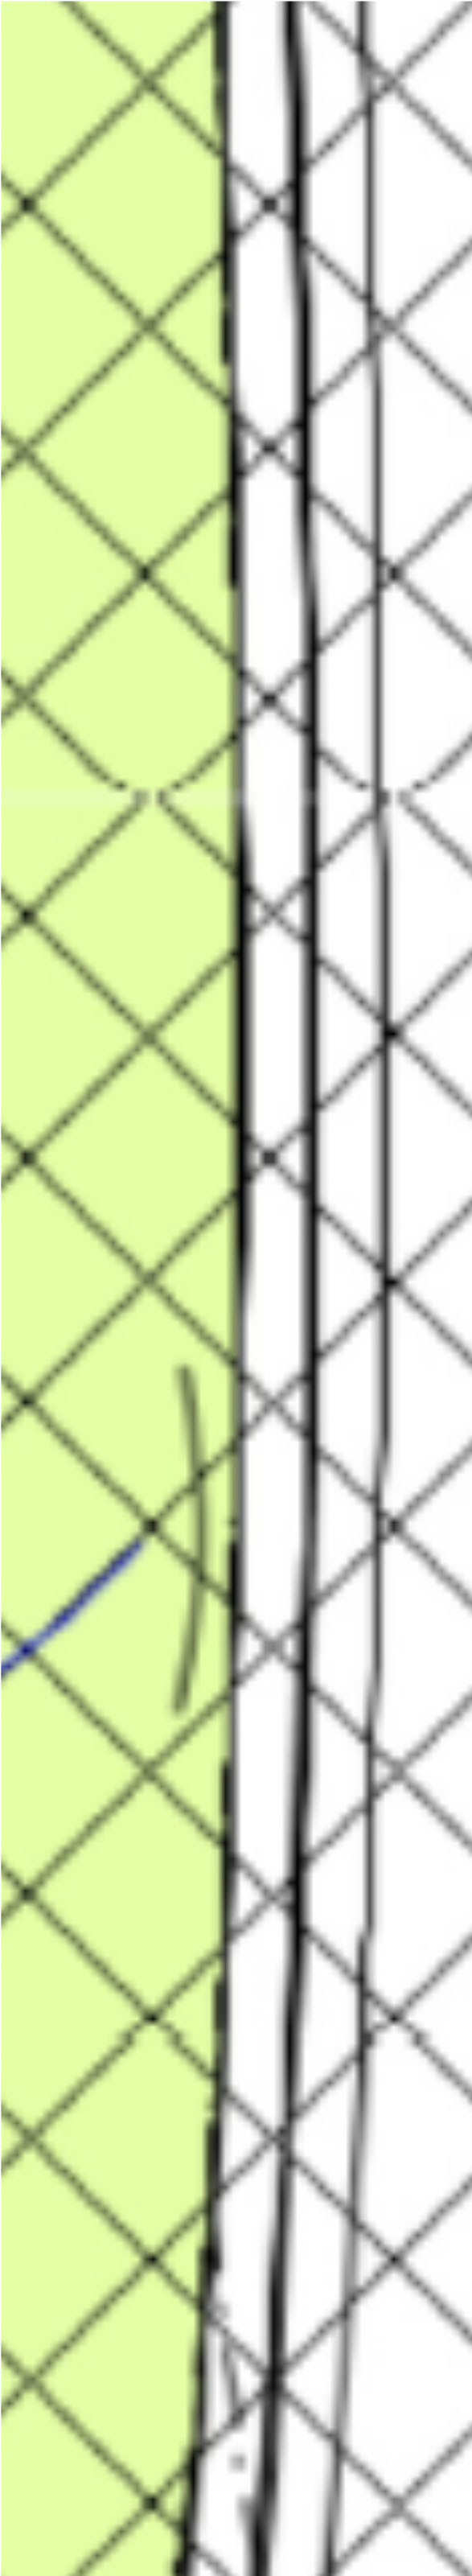 2.4 Eiendomsforhold 2.4.1 Eiendomskart Figur 4